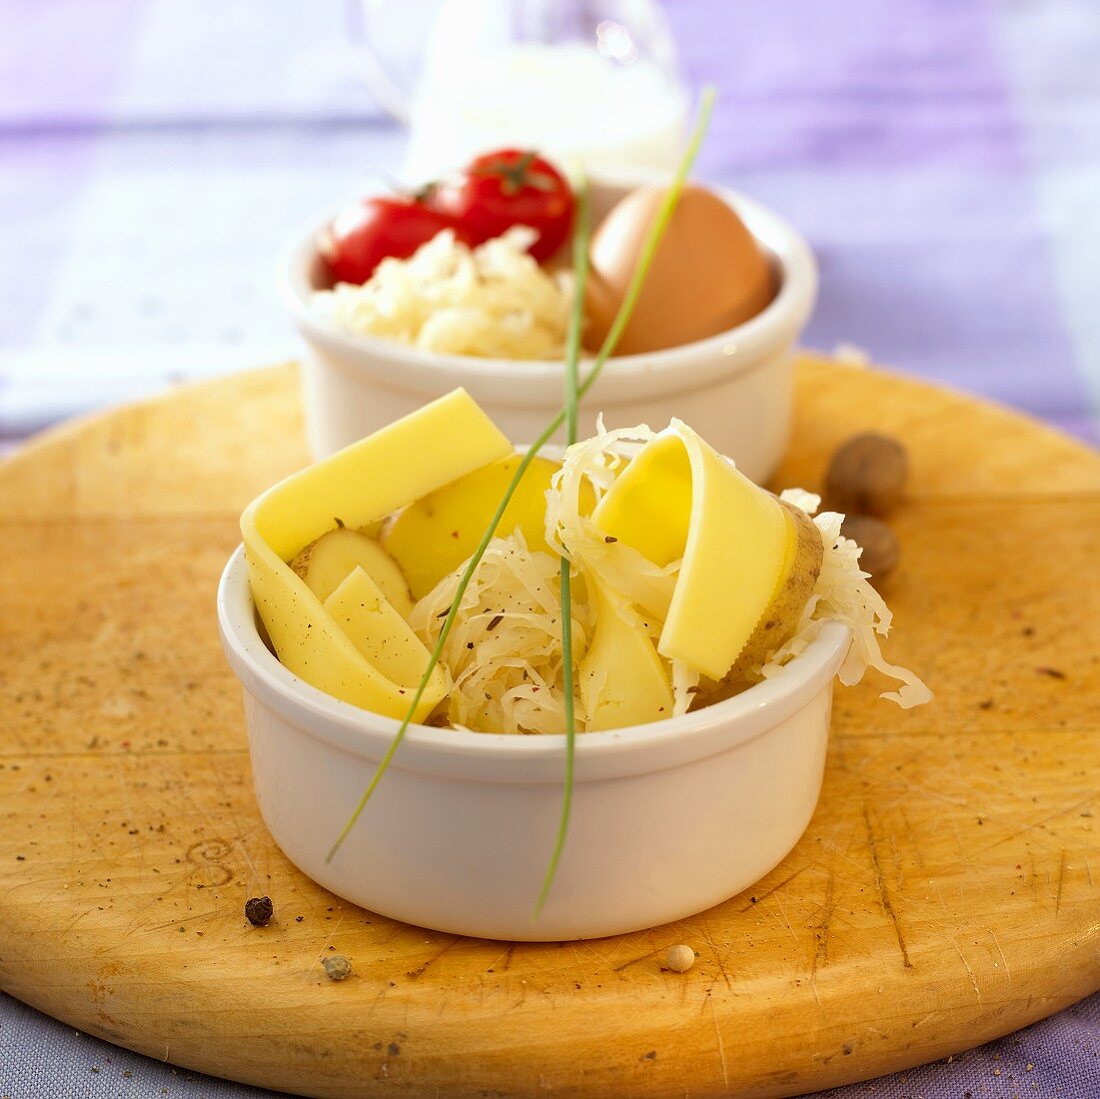 Ingredients: sauerkraut, potatoes, cheese, egg, milk, tomatoes